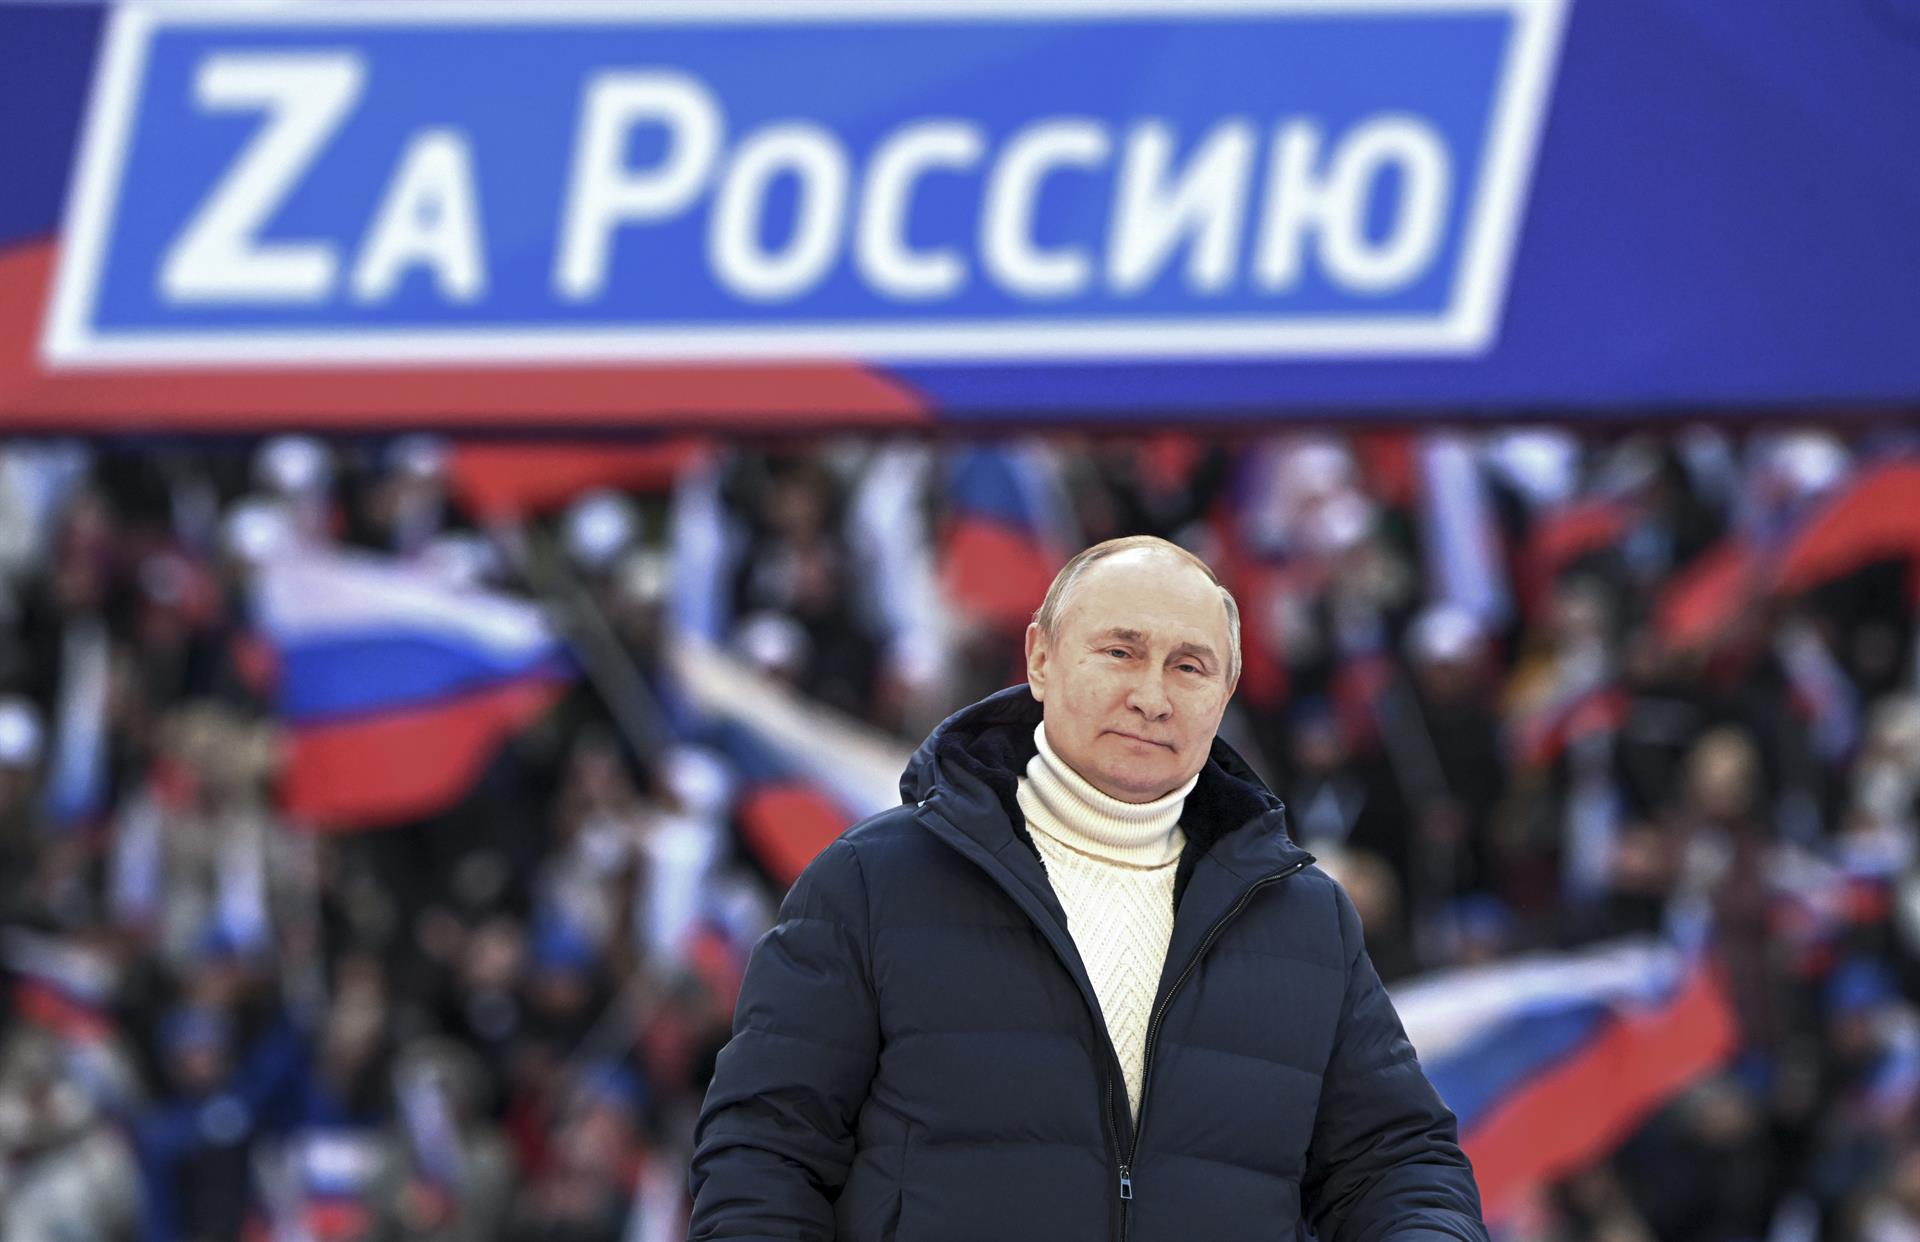 L'elit russa vol eliminar Putin?